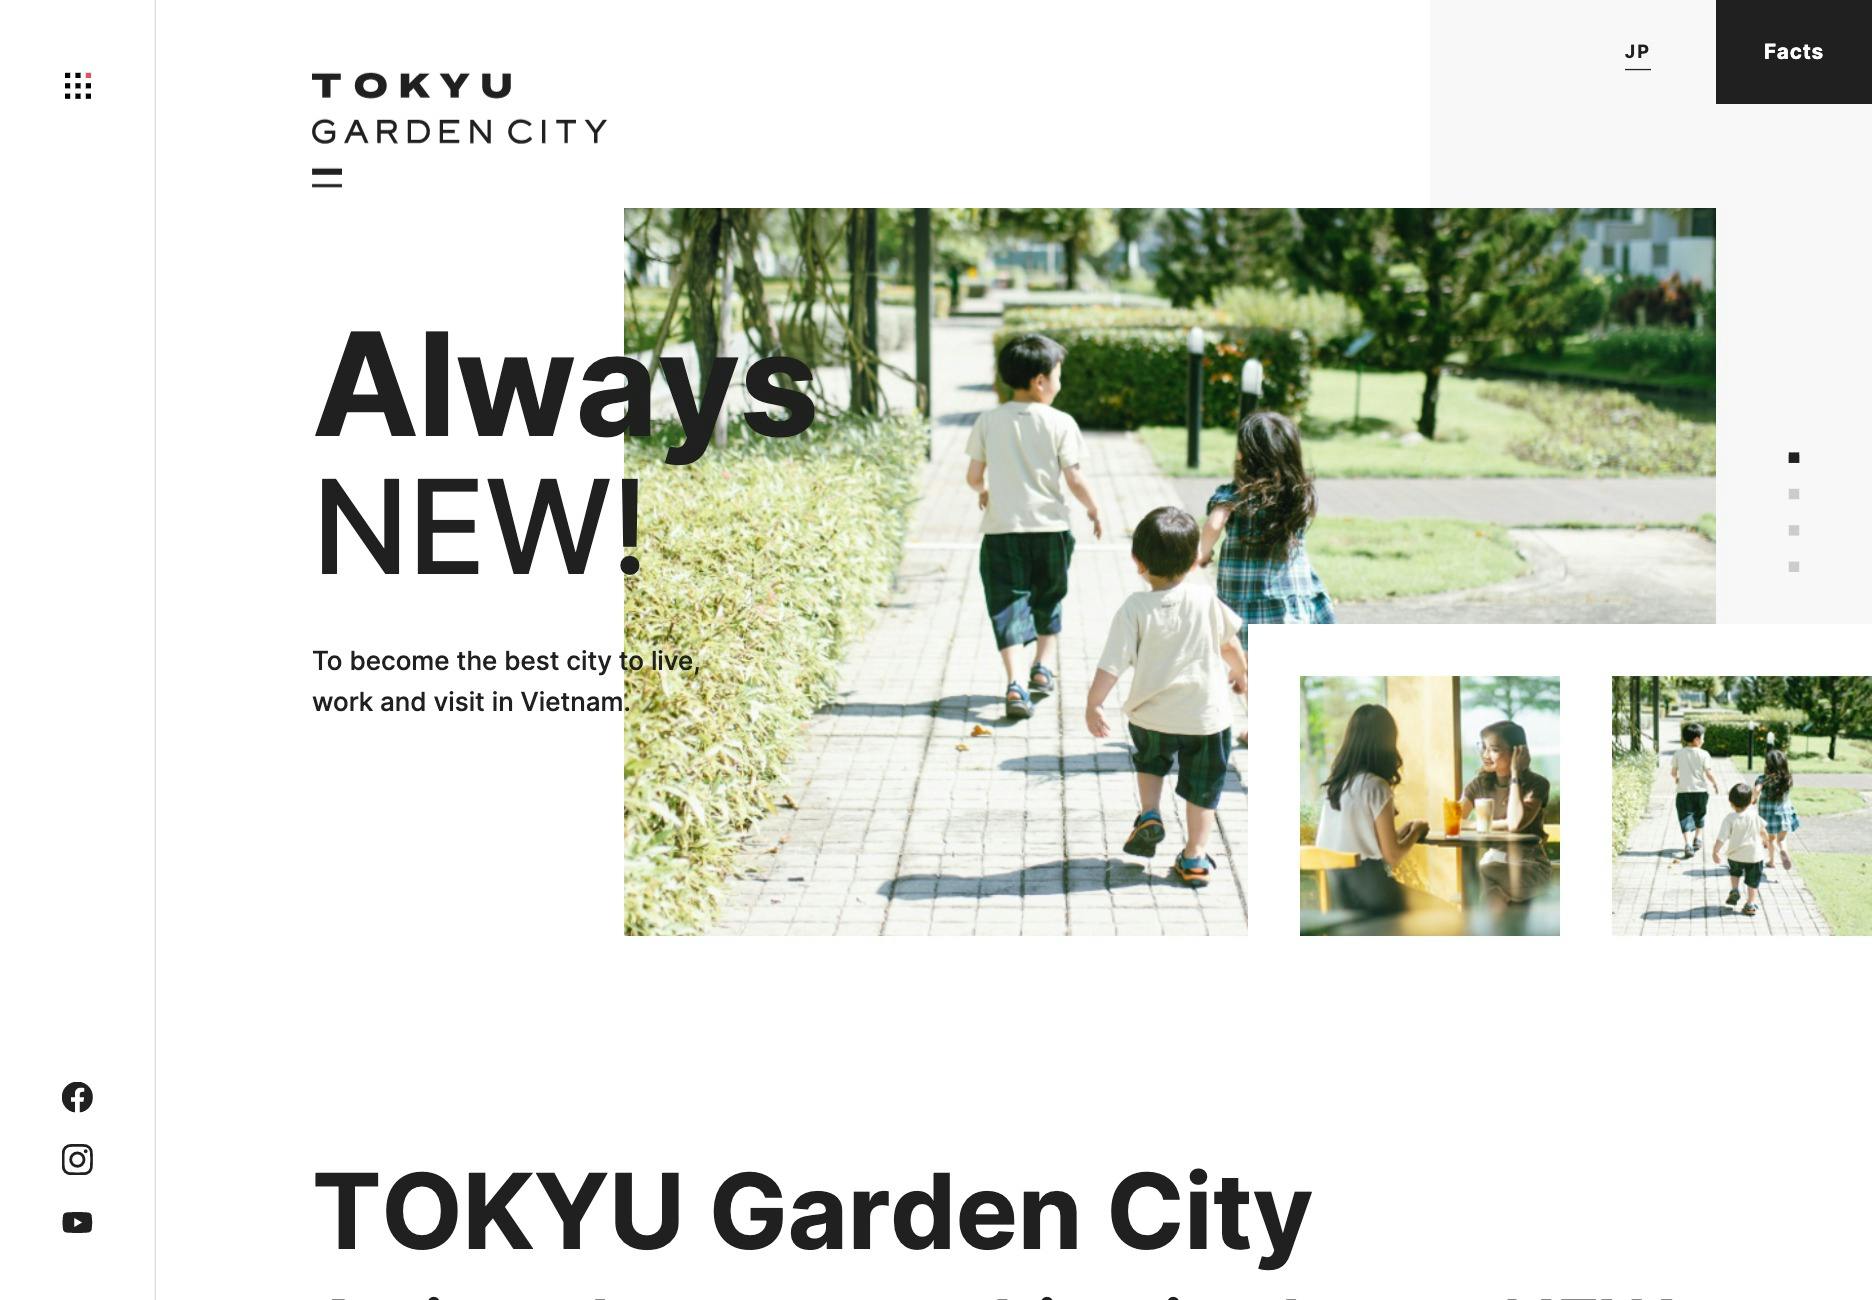 Cover Image for TOKYU Garden City – ベカメックス東急, ビンズオン